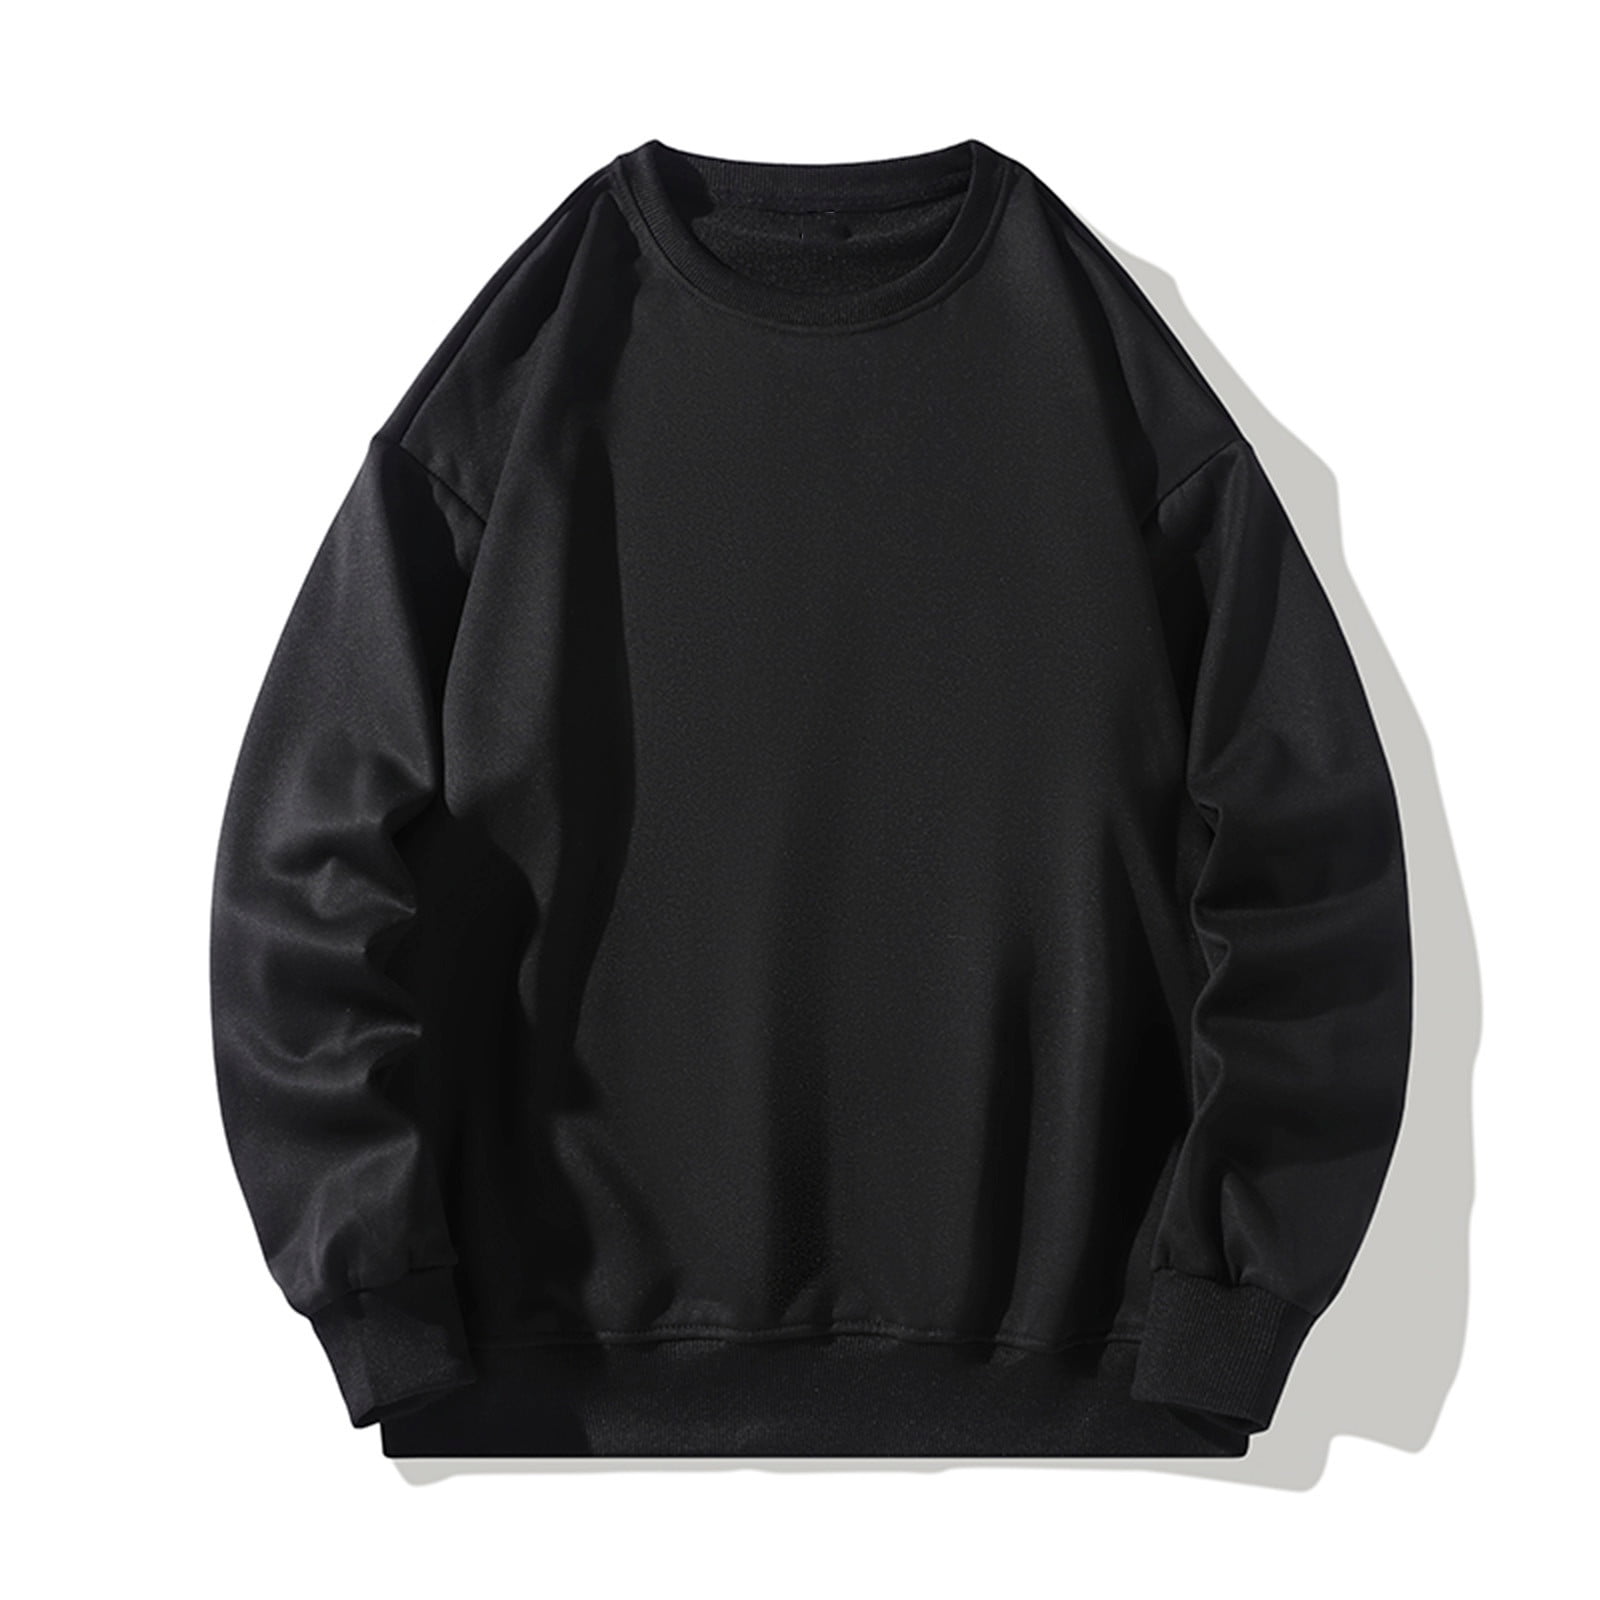 Voncos Pullover Sweatshirt for Men Clearance- Lightweight Casual Autumn ...